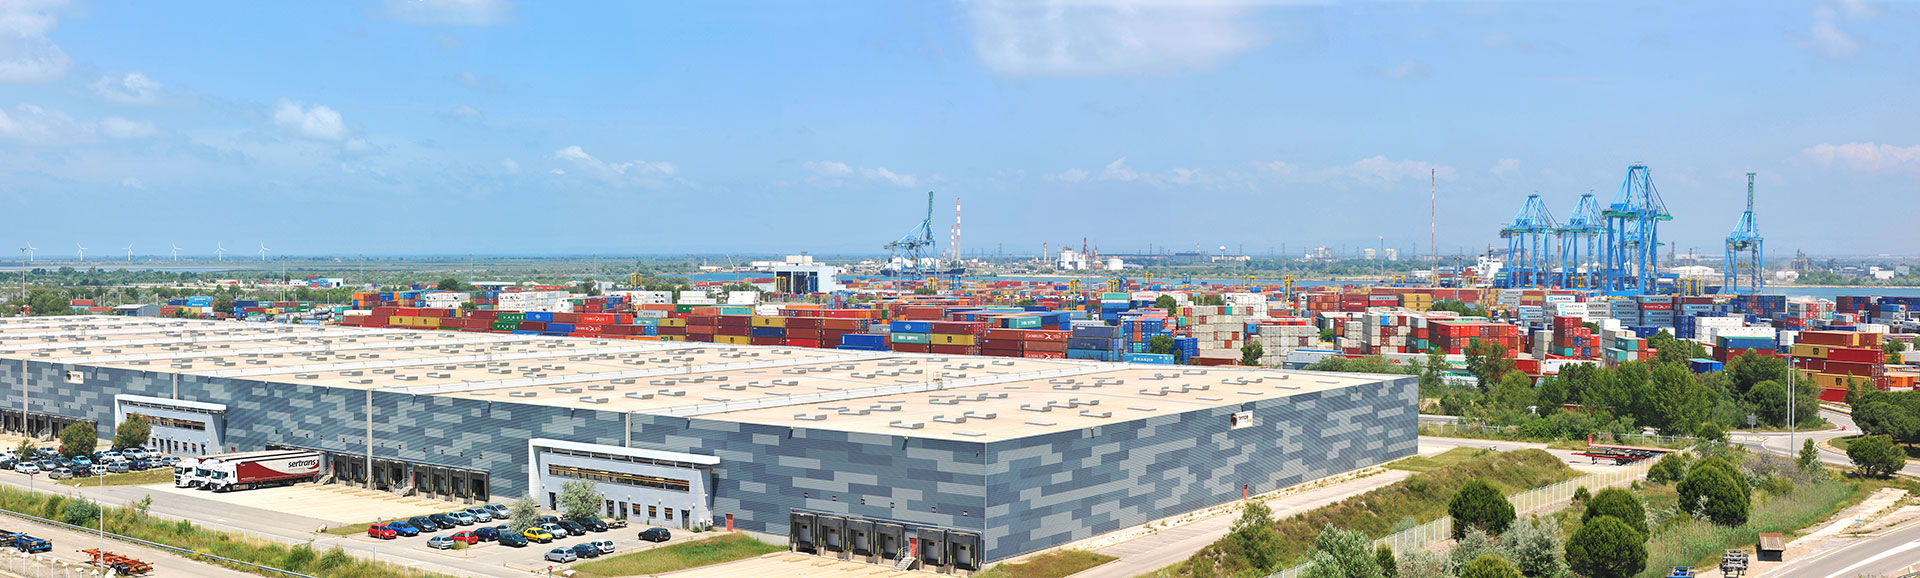 A multi-sector port